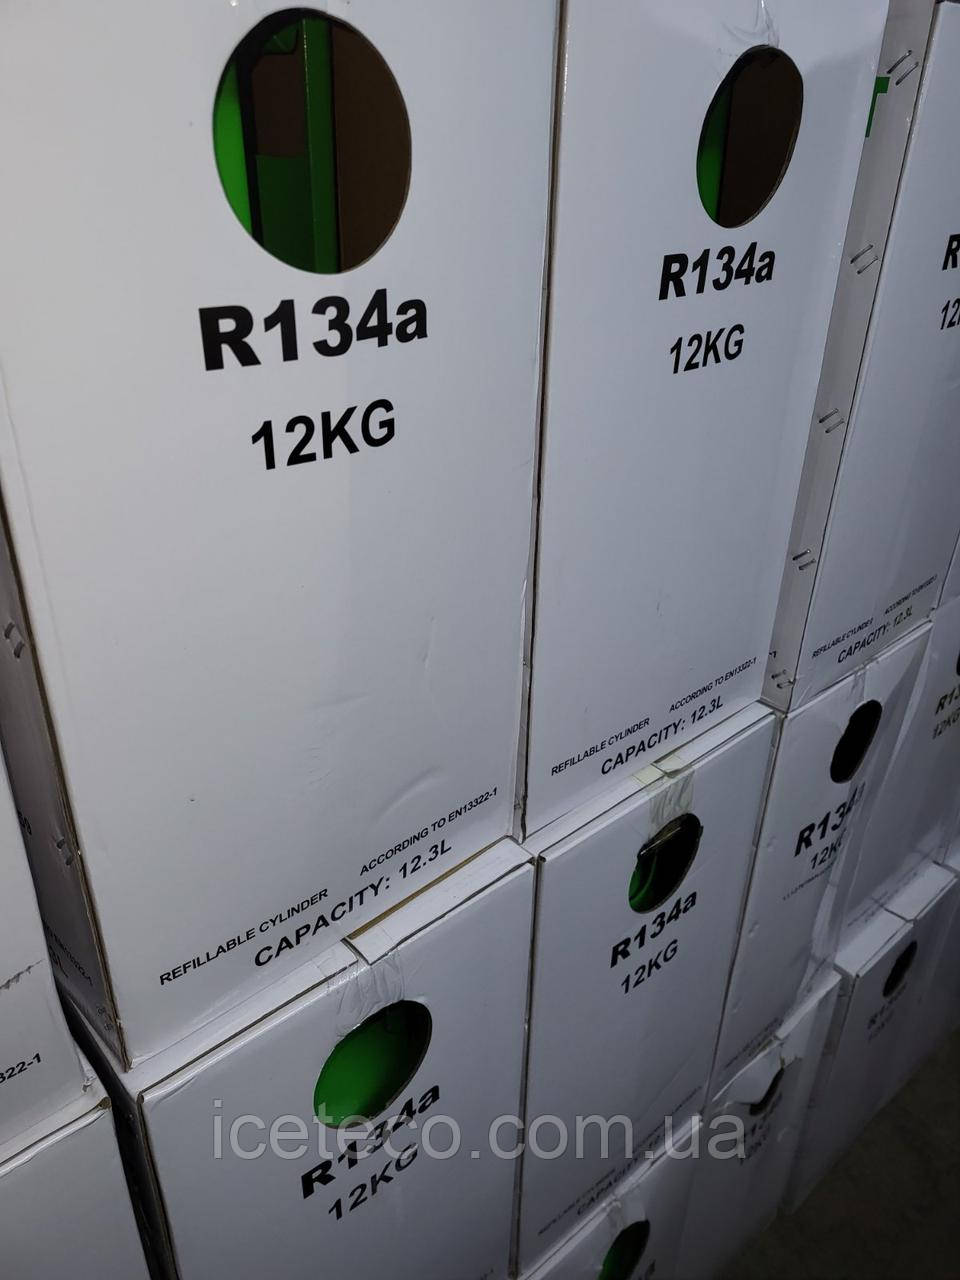 Фреон R134a, Хладон R134a, Refrigerant R134a (багаторазовий балон 12 кг)